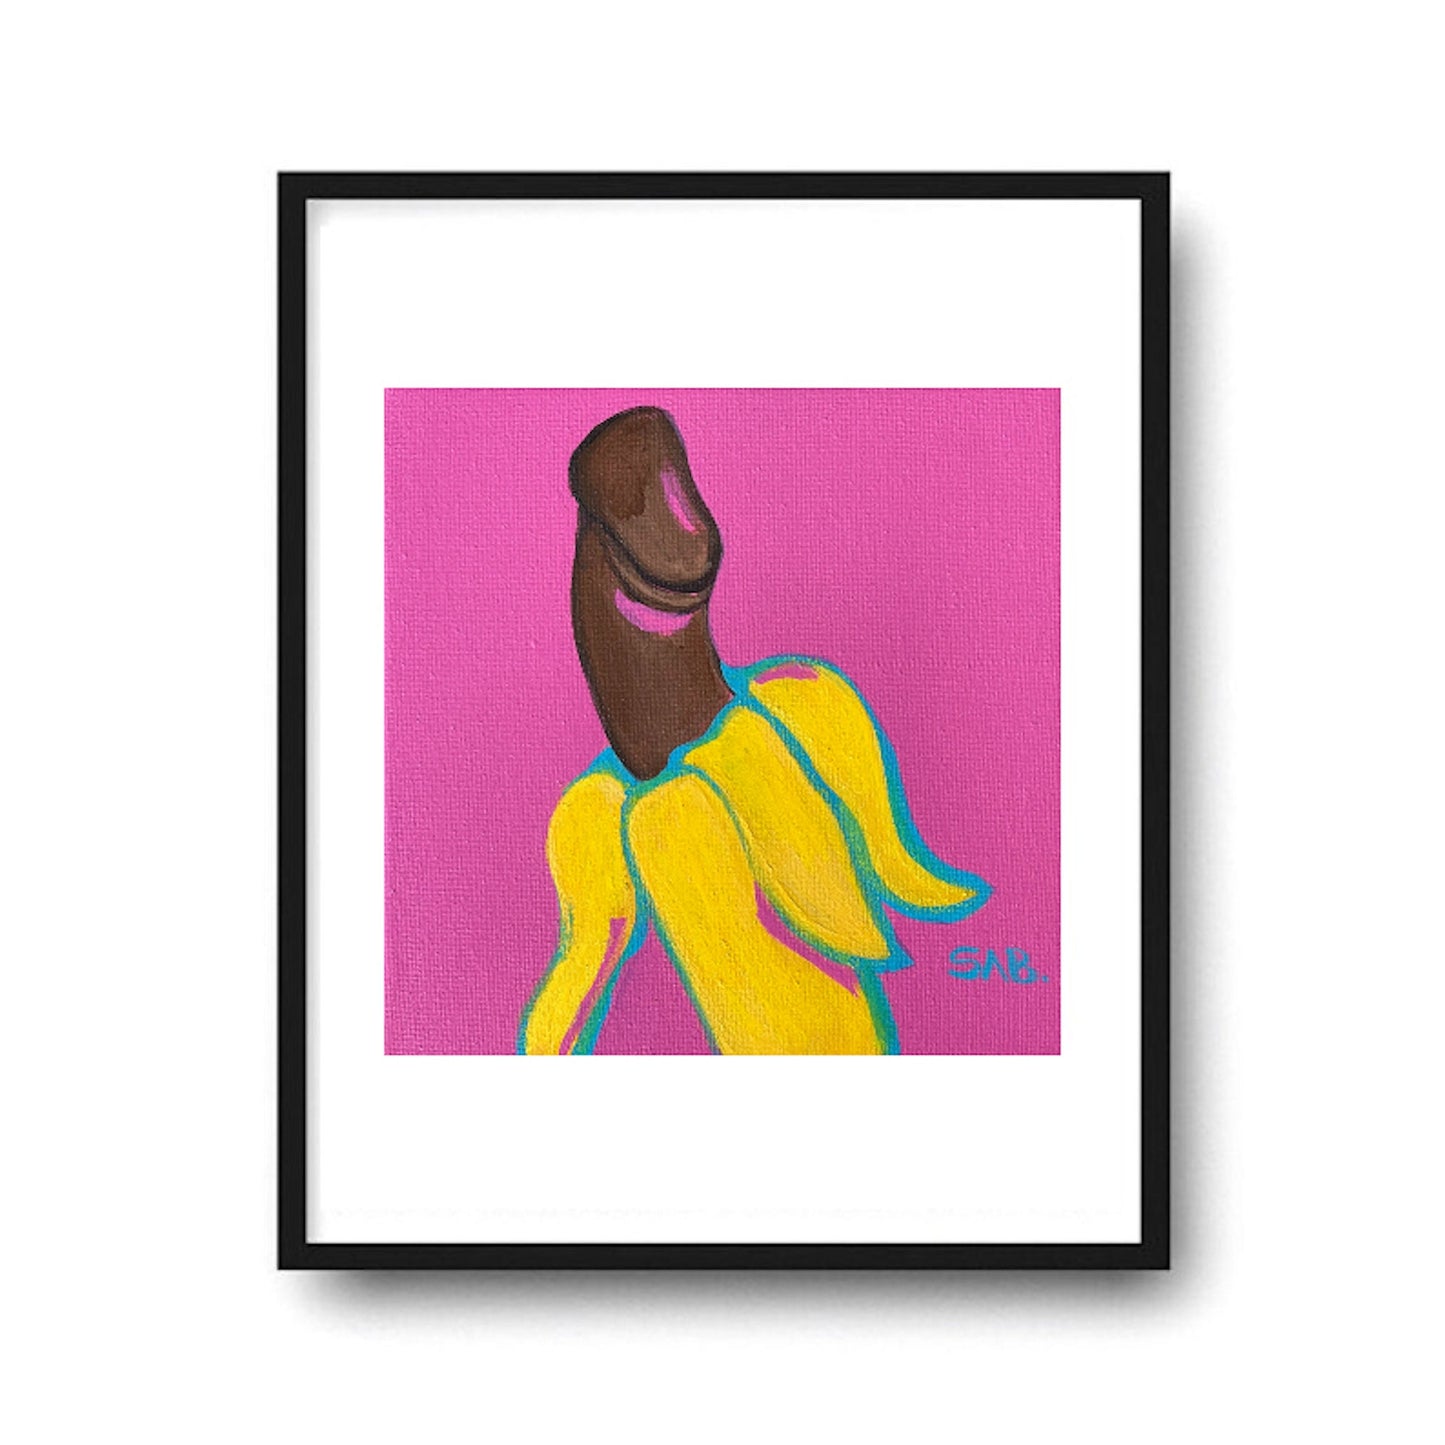 Pop Art mini acrylic paintings gay abstract penis pride modern fine art print 8x8 canvas dick art lgbtq gay men home decor sexy nude erotic